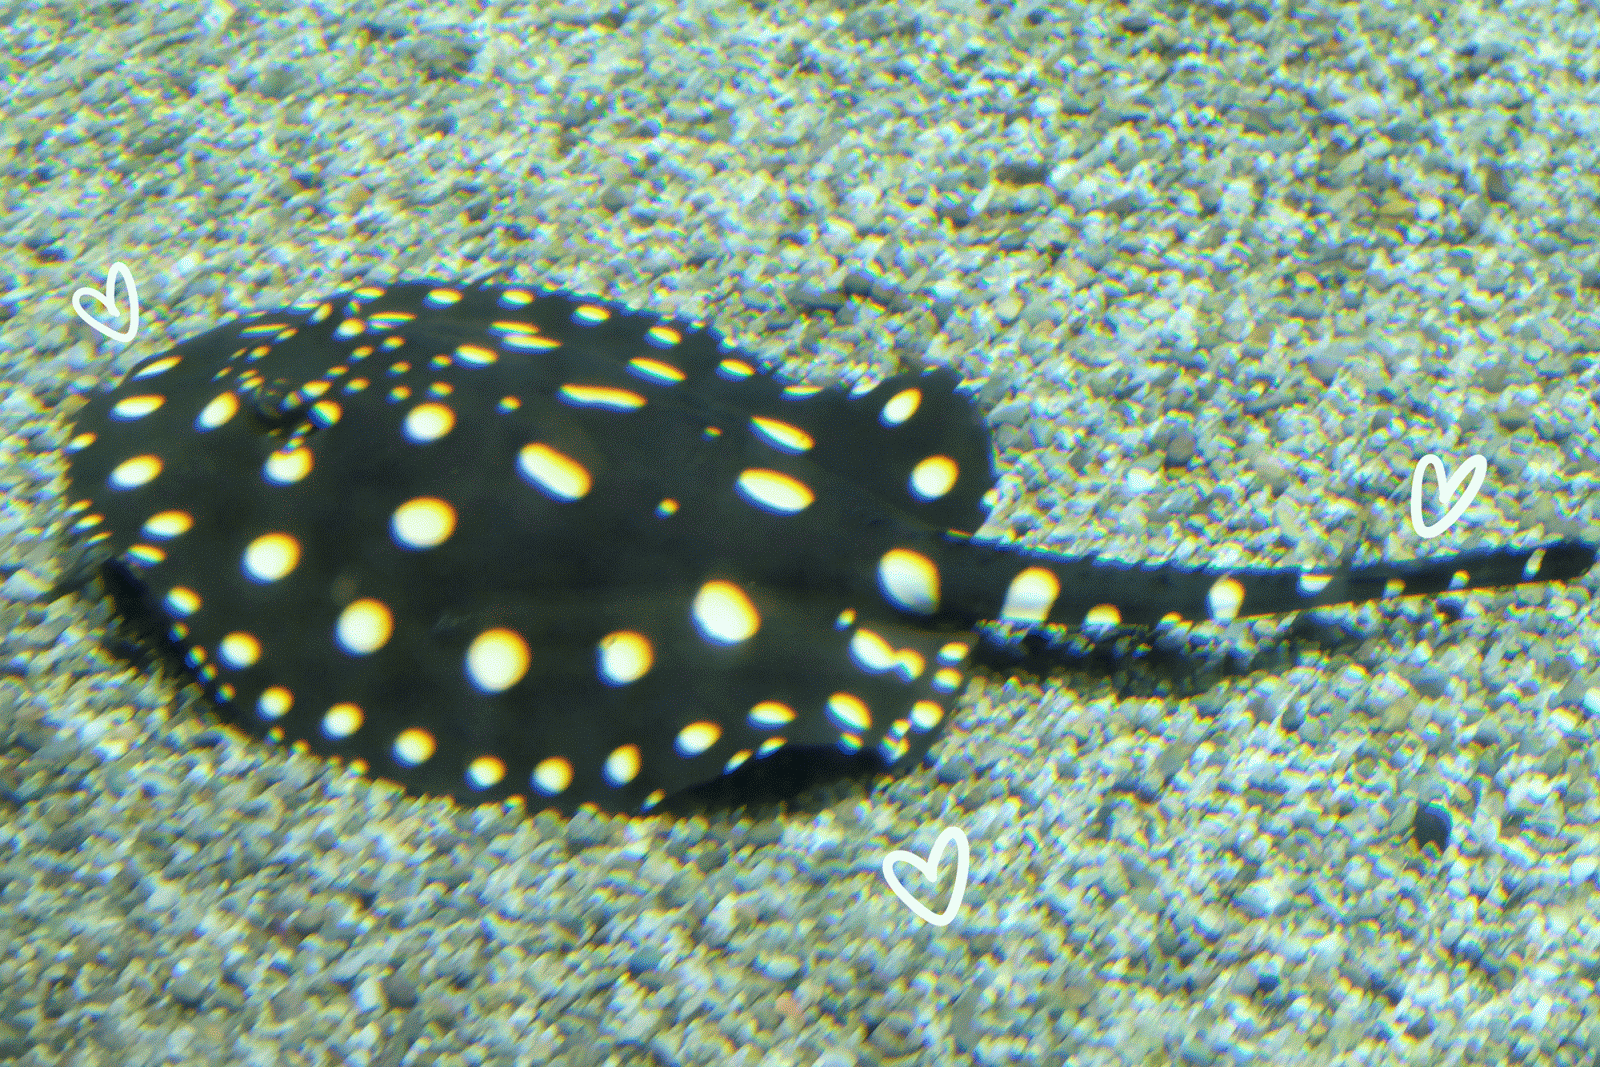 Osaka Aquarium Kaiyukan Polkadot Stingray | www.bigdreamerblog.com